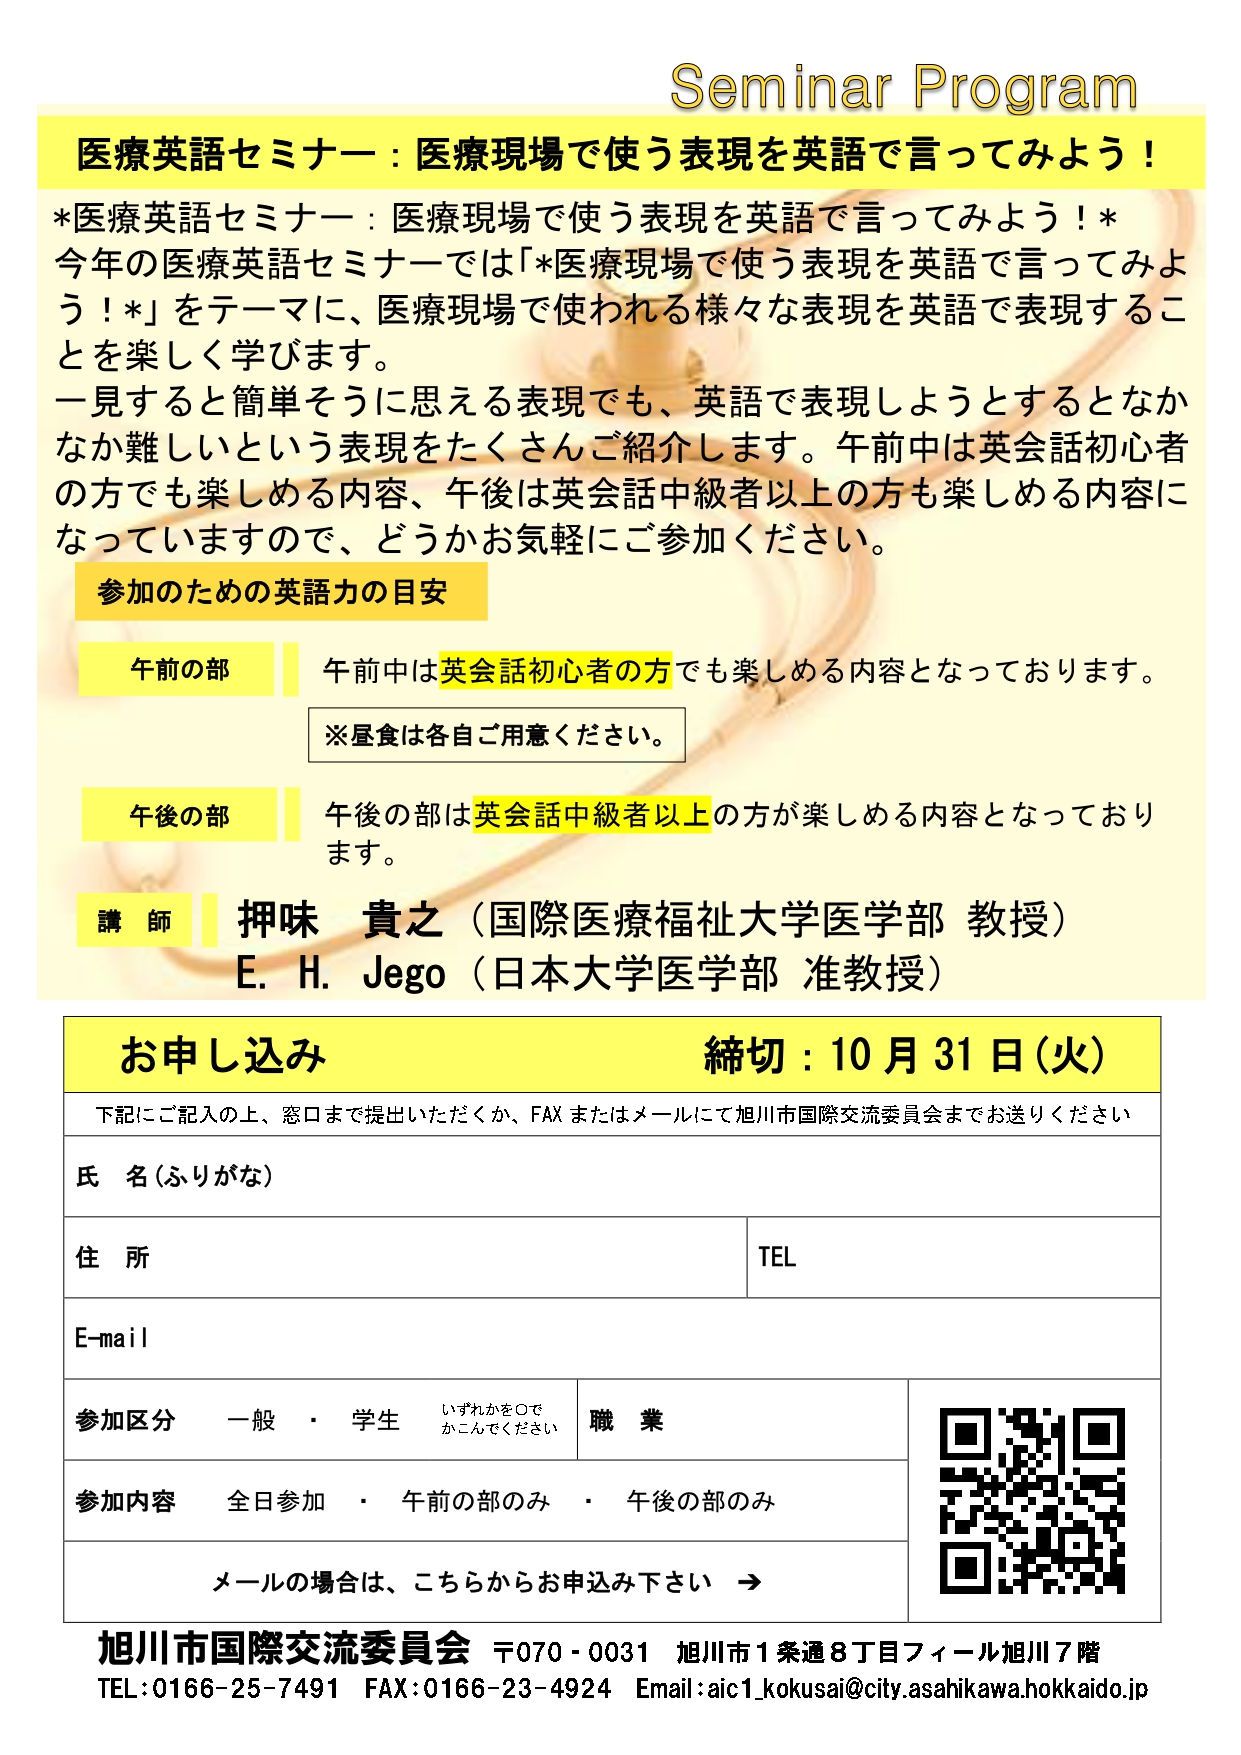 http://asahikawaic.jp/information/images/18thmedical_seminar.jpg